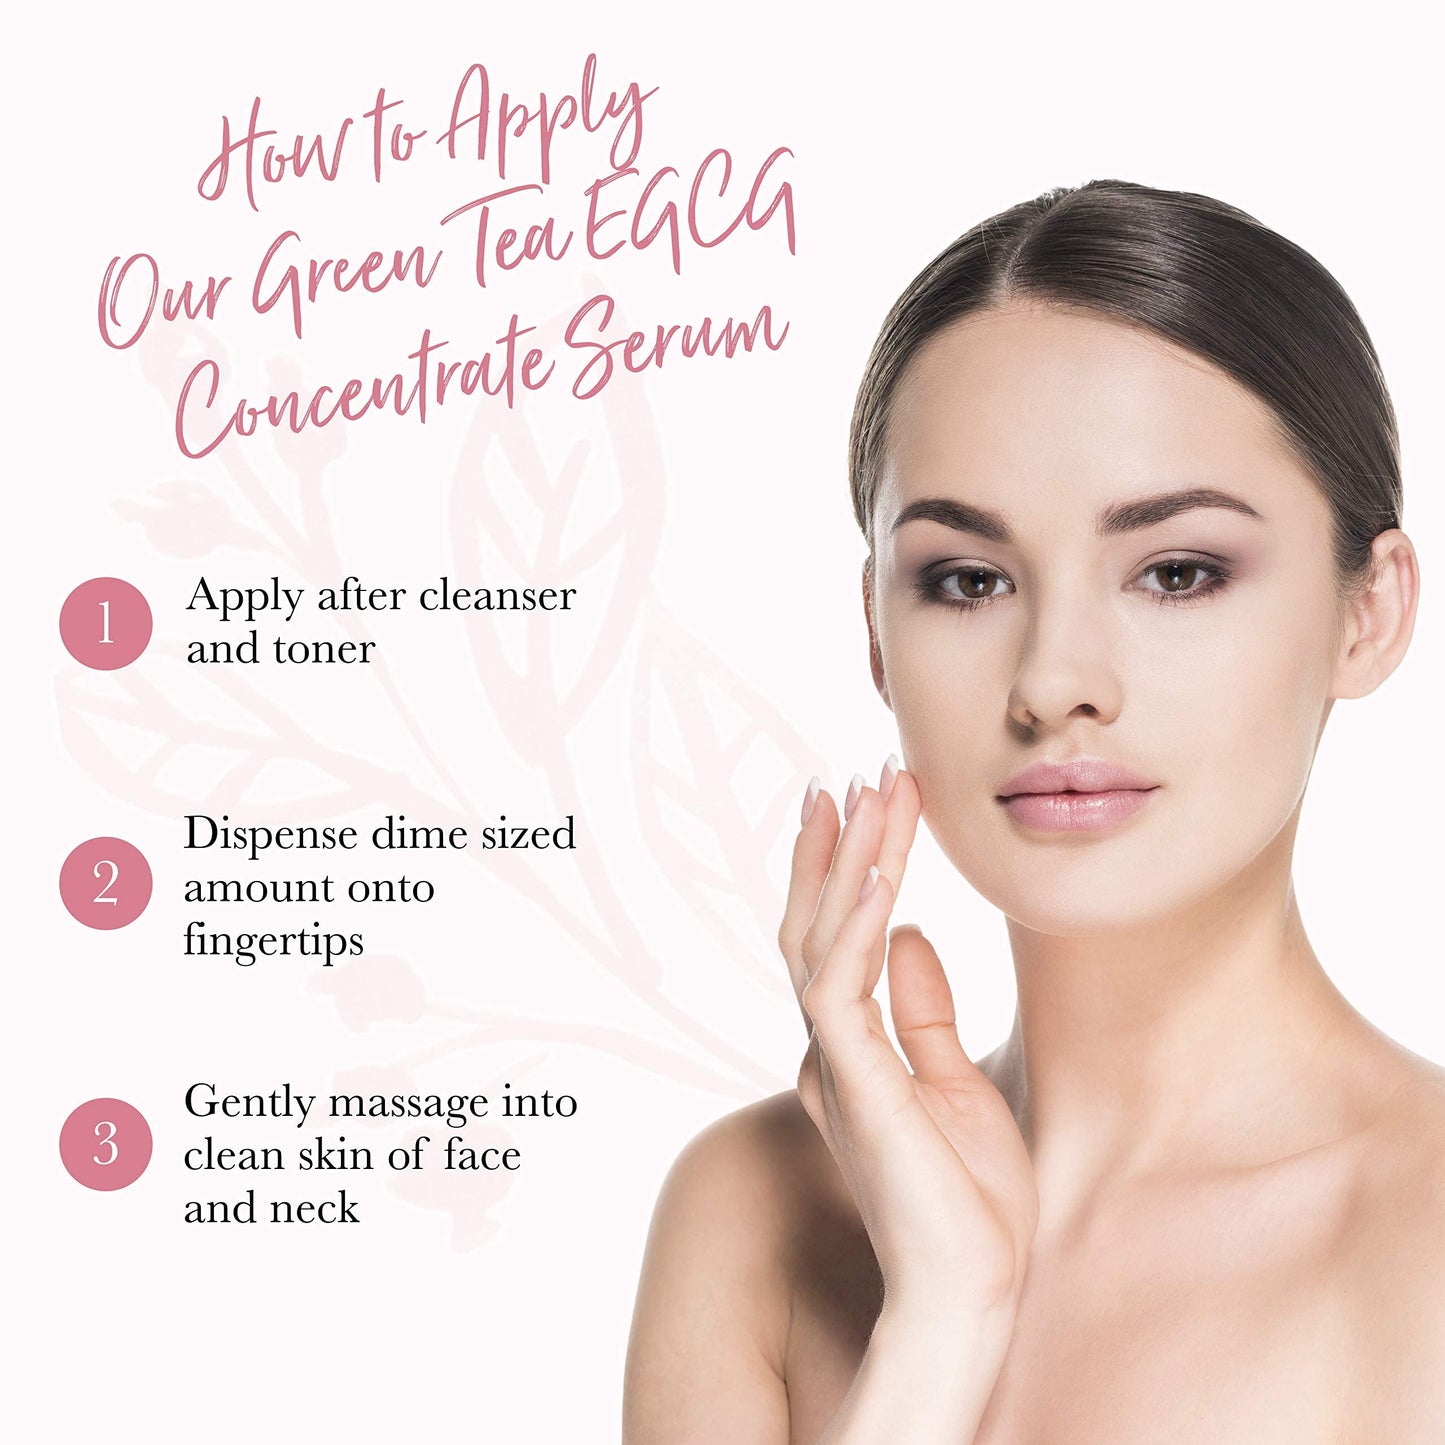 100% PURE Green Tea EGCG Serum, Daily Anti-Wrinkle Serum for All Skin Types, Anti-Wrinkle Facial Serum, Made with Green Tea EGCG (1 Fl Oz)